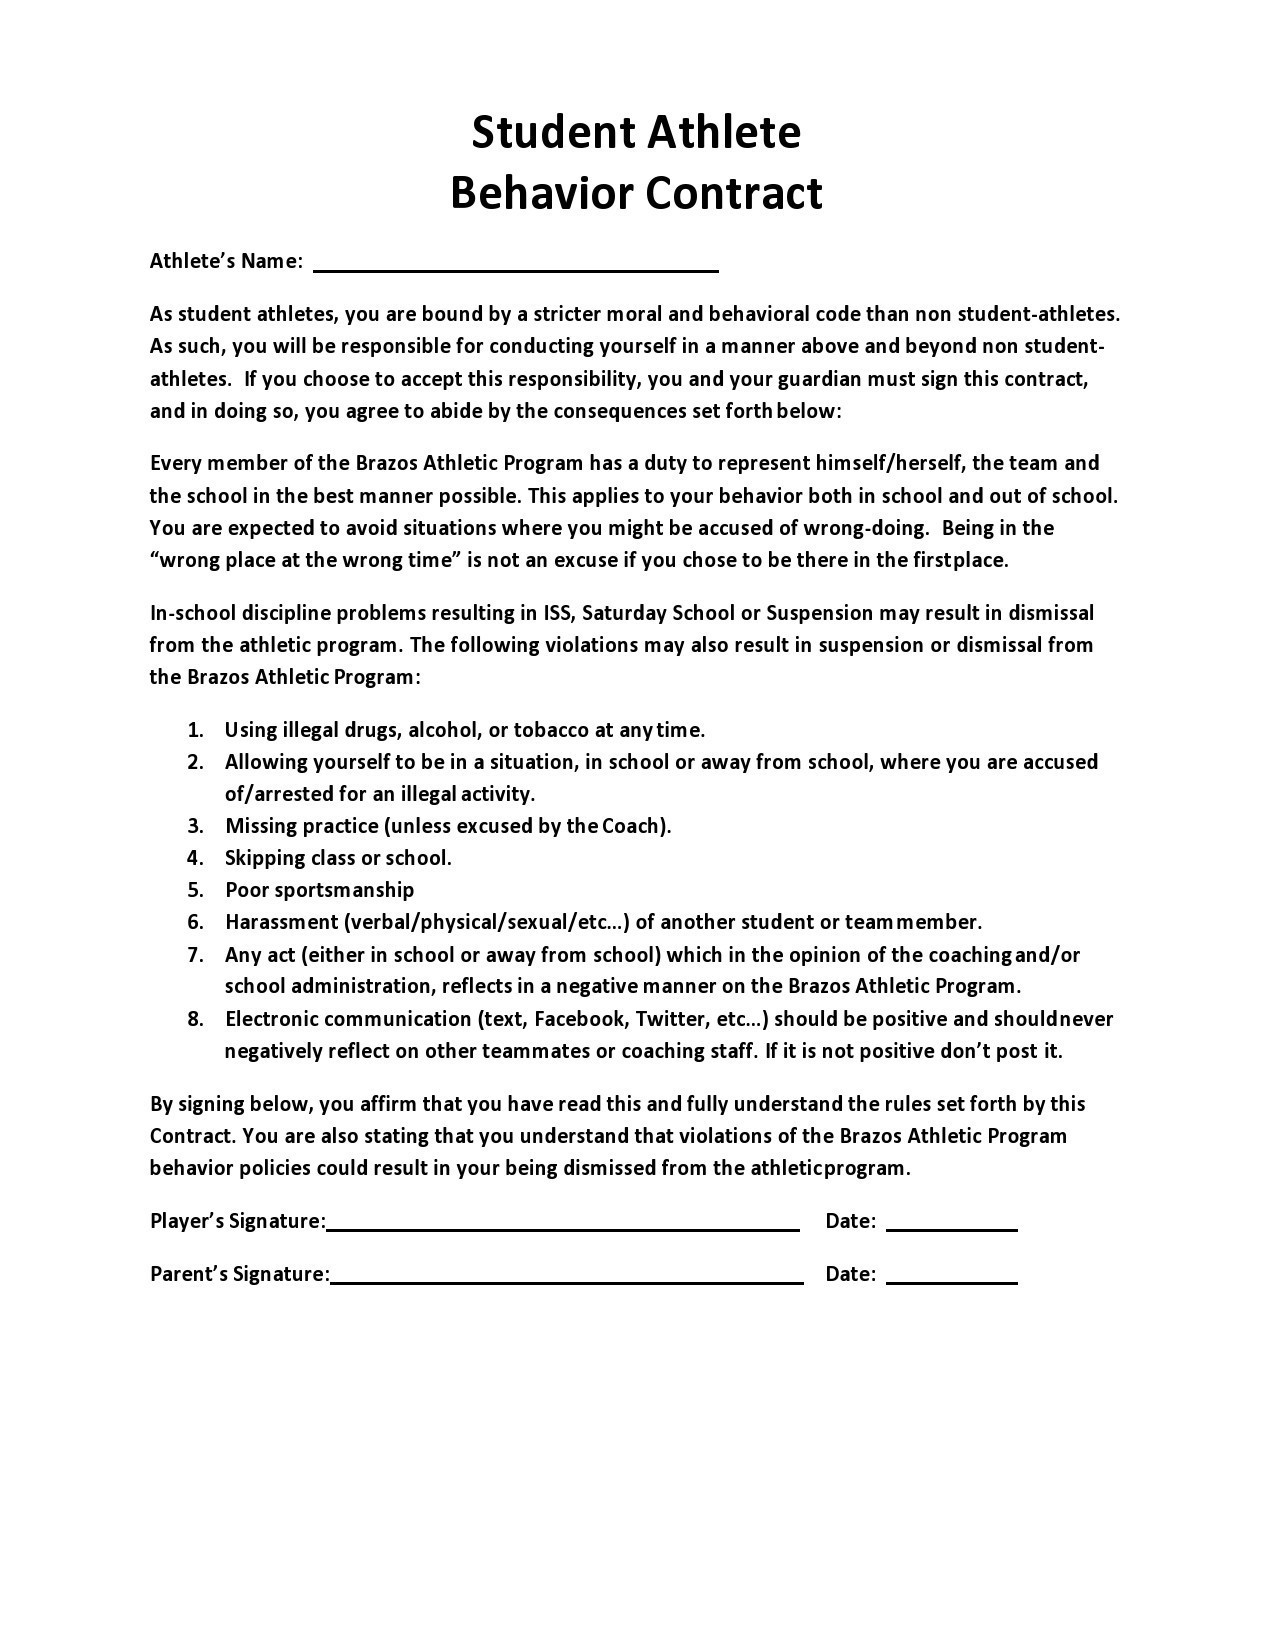 Free behavior contract template 41